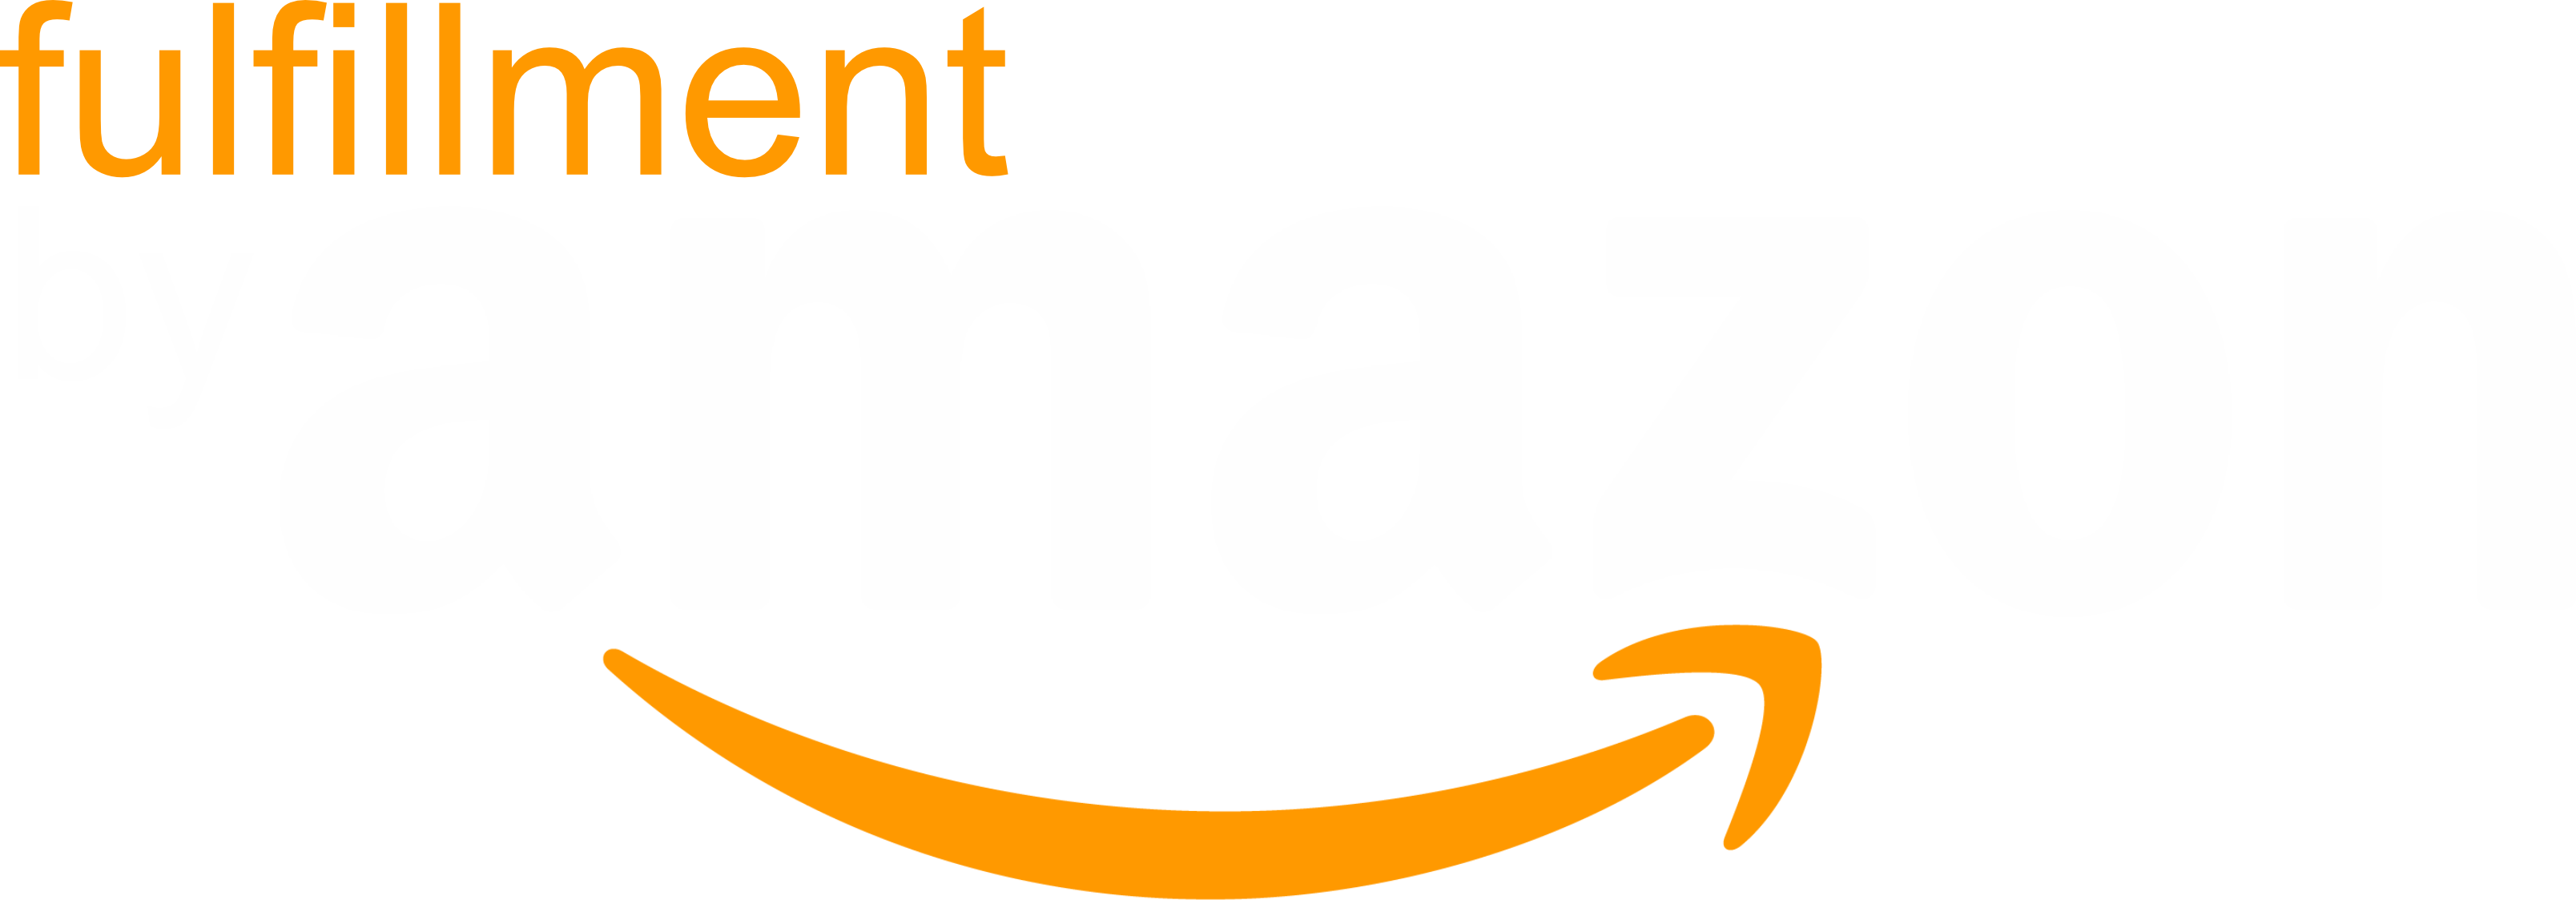 Fulfilment by Amazon